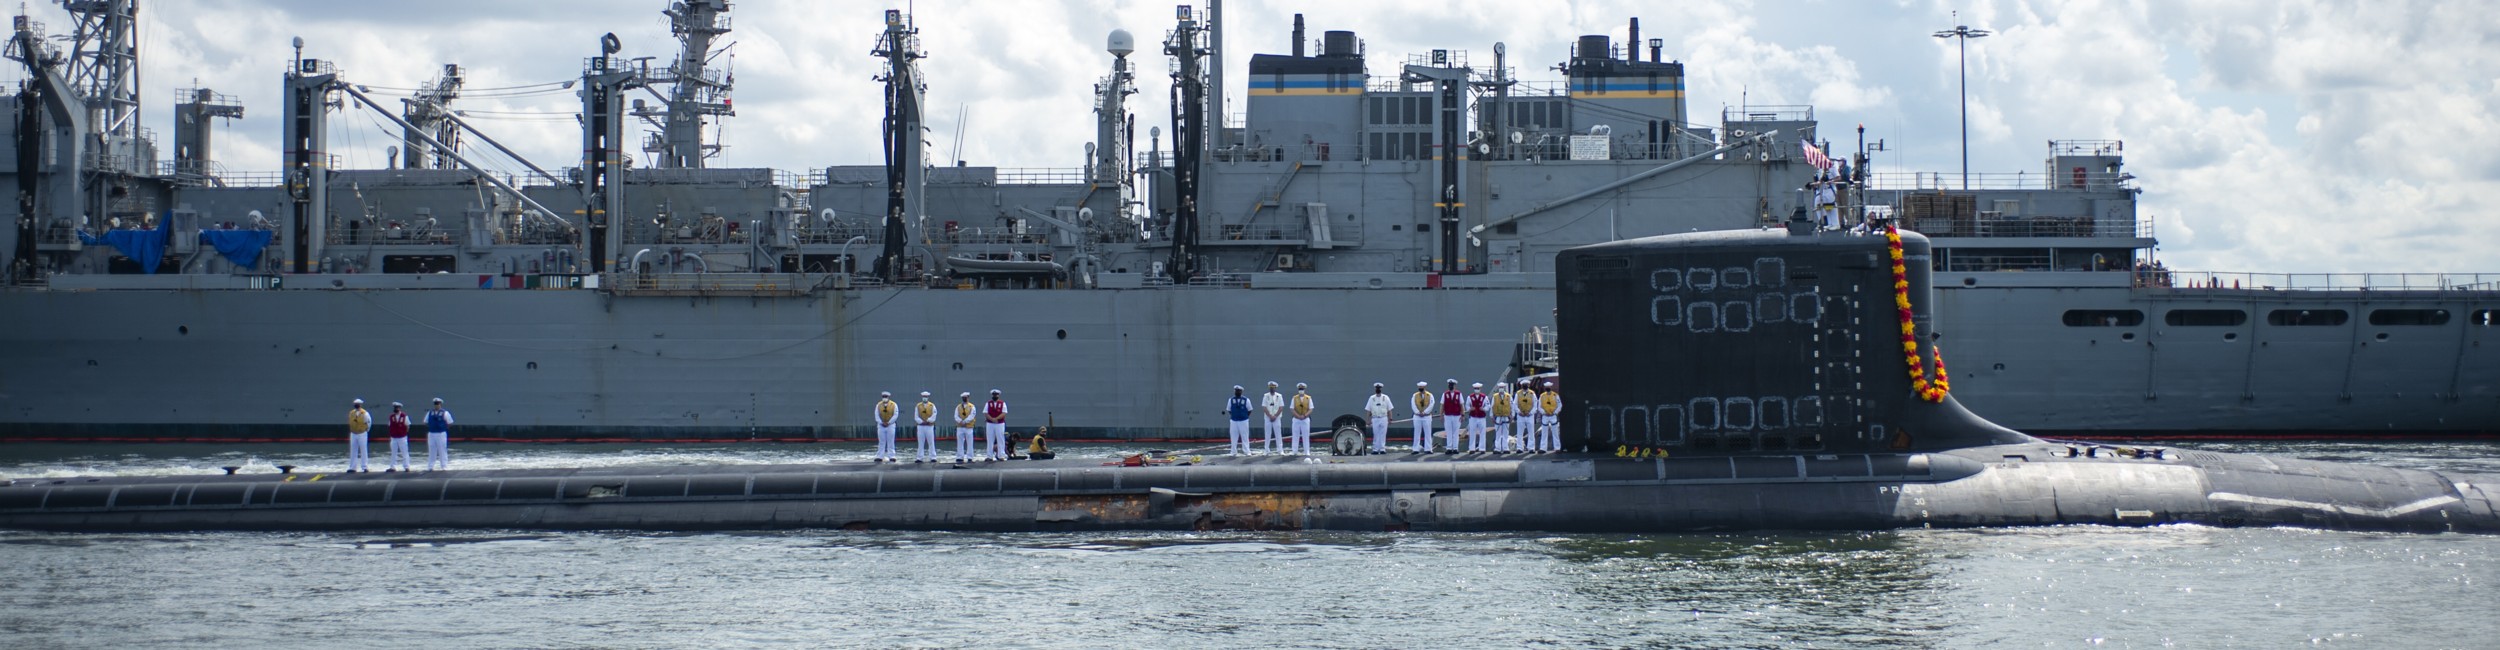 ssn-779 uss new mexico virginia class attack submarine us navy 59